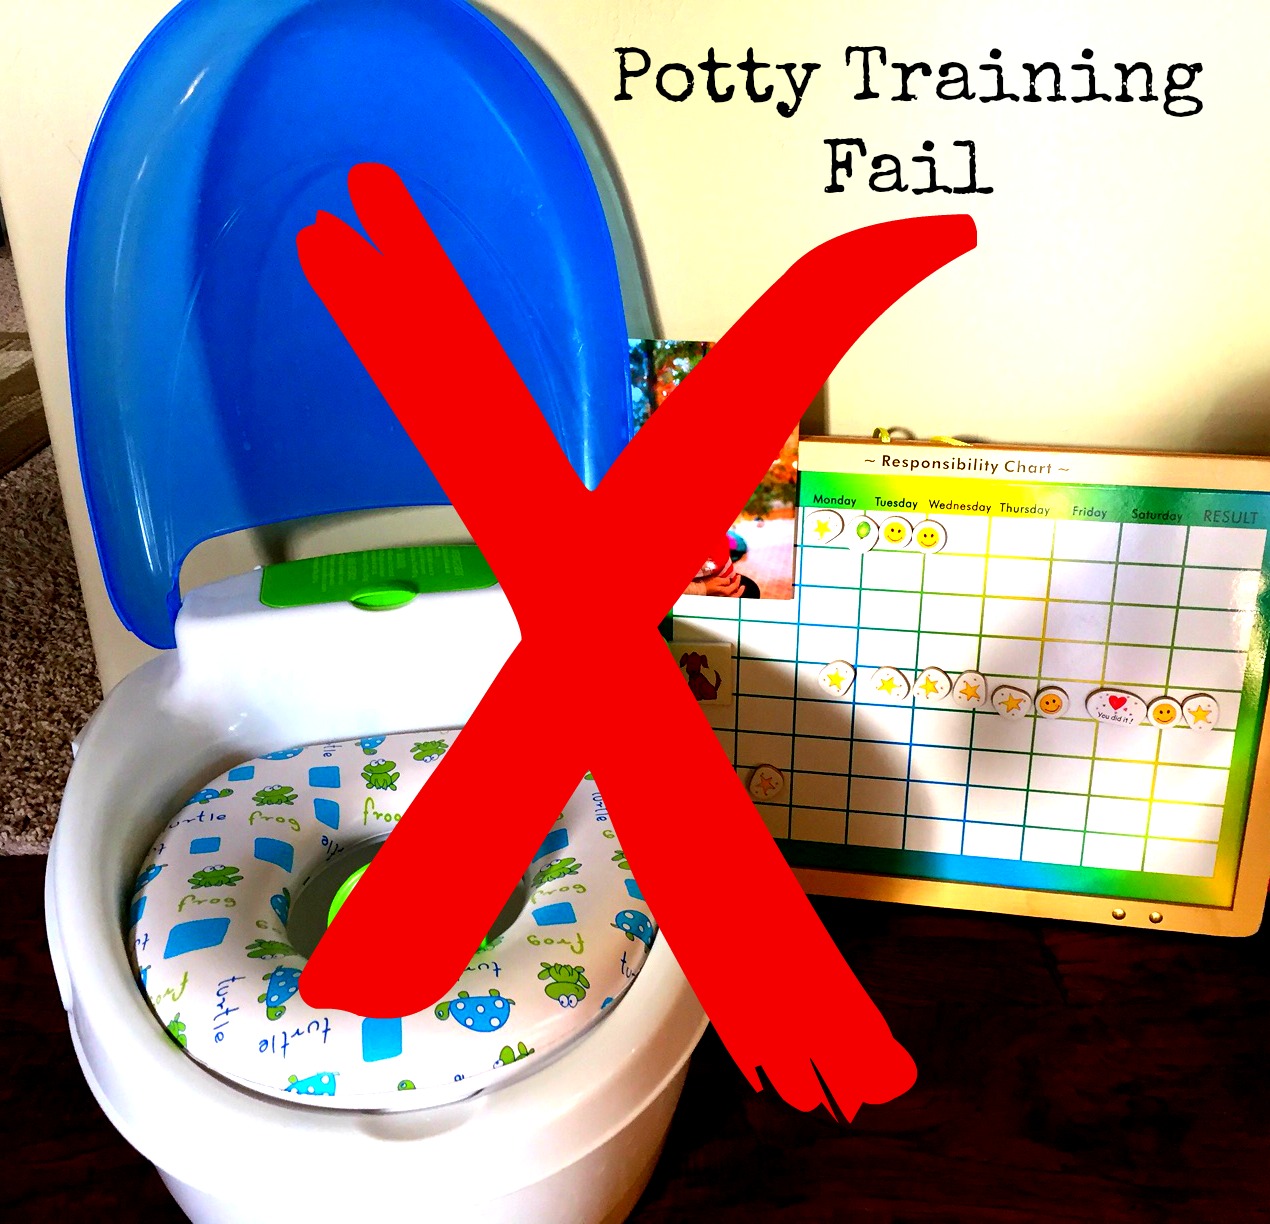 Update on Potty Training